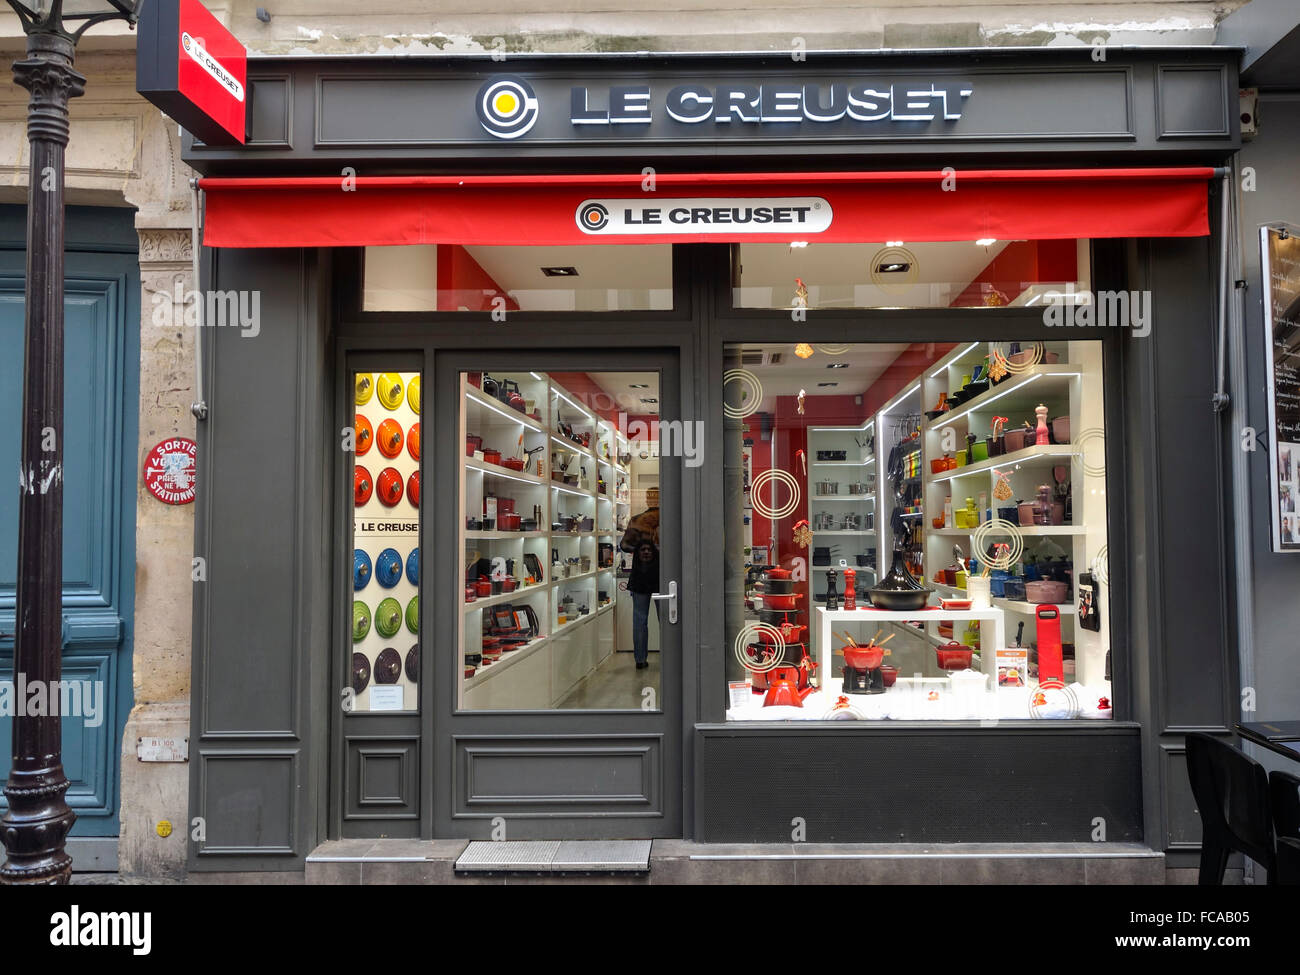 Le Creuset, facciata finestra store, Francese pentole, Parigi, Francia. Foto Stock